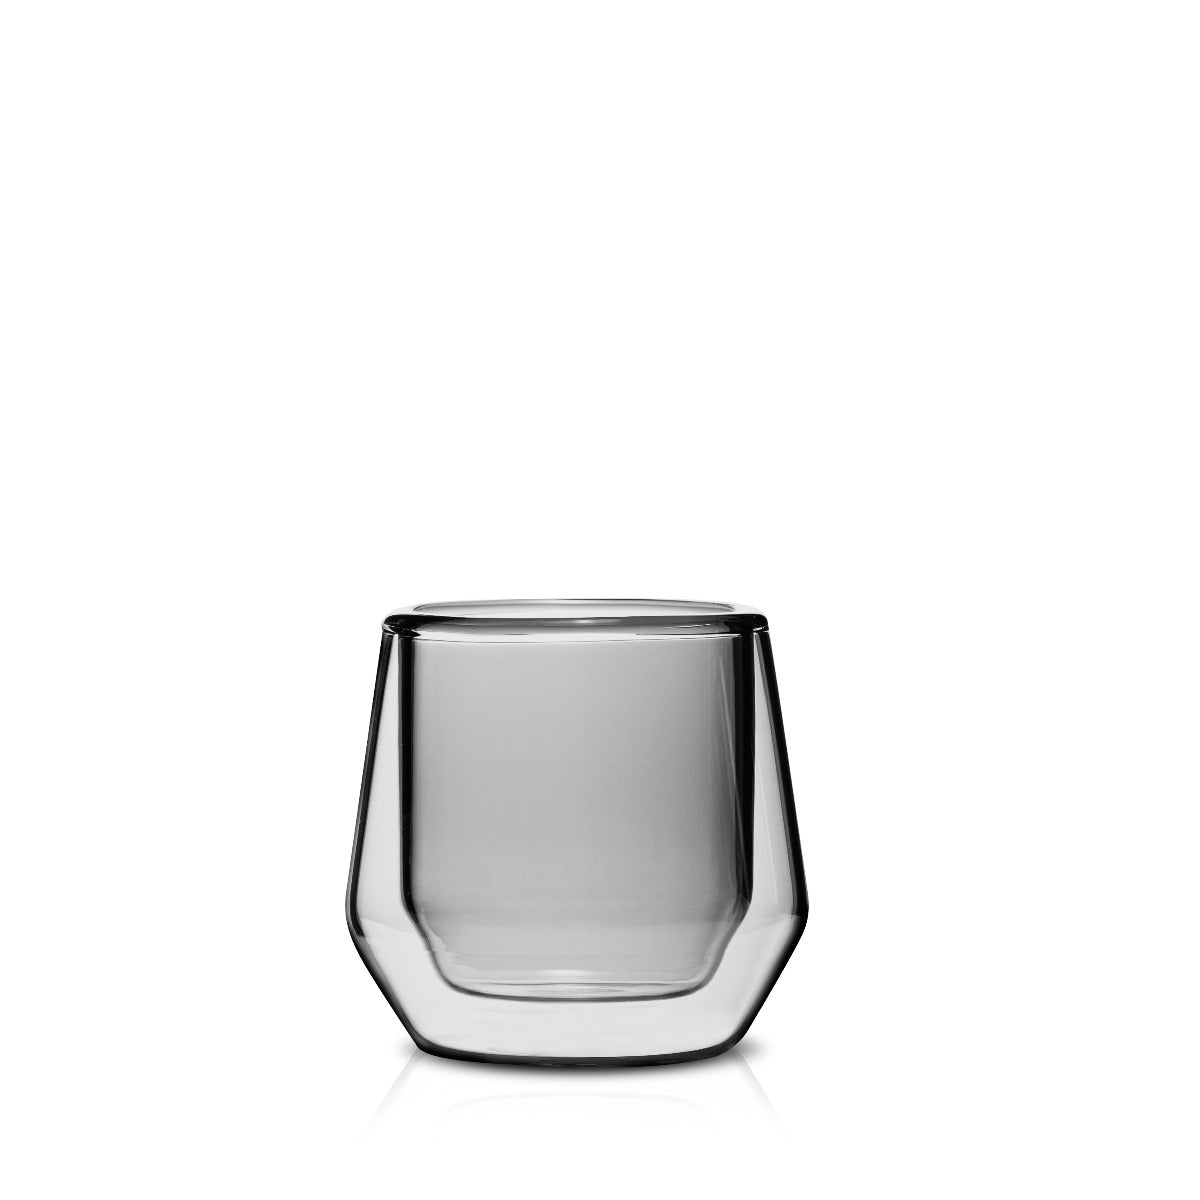 Hearth Double Wall Glass Espresso Cup, 75ml (2.5 oz) - Set of 2